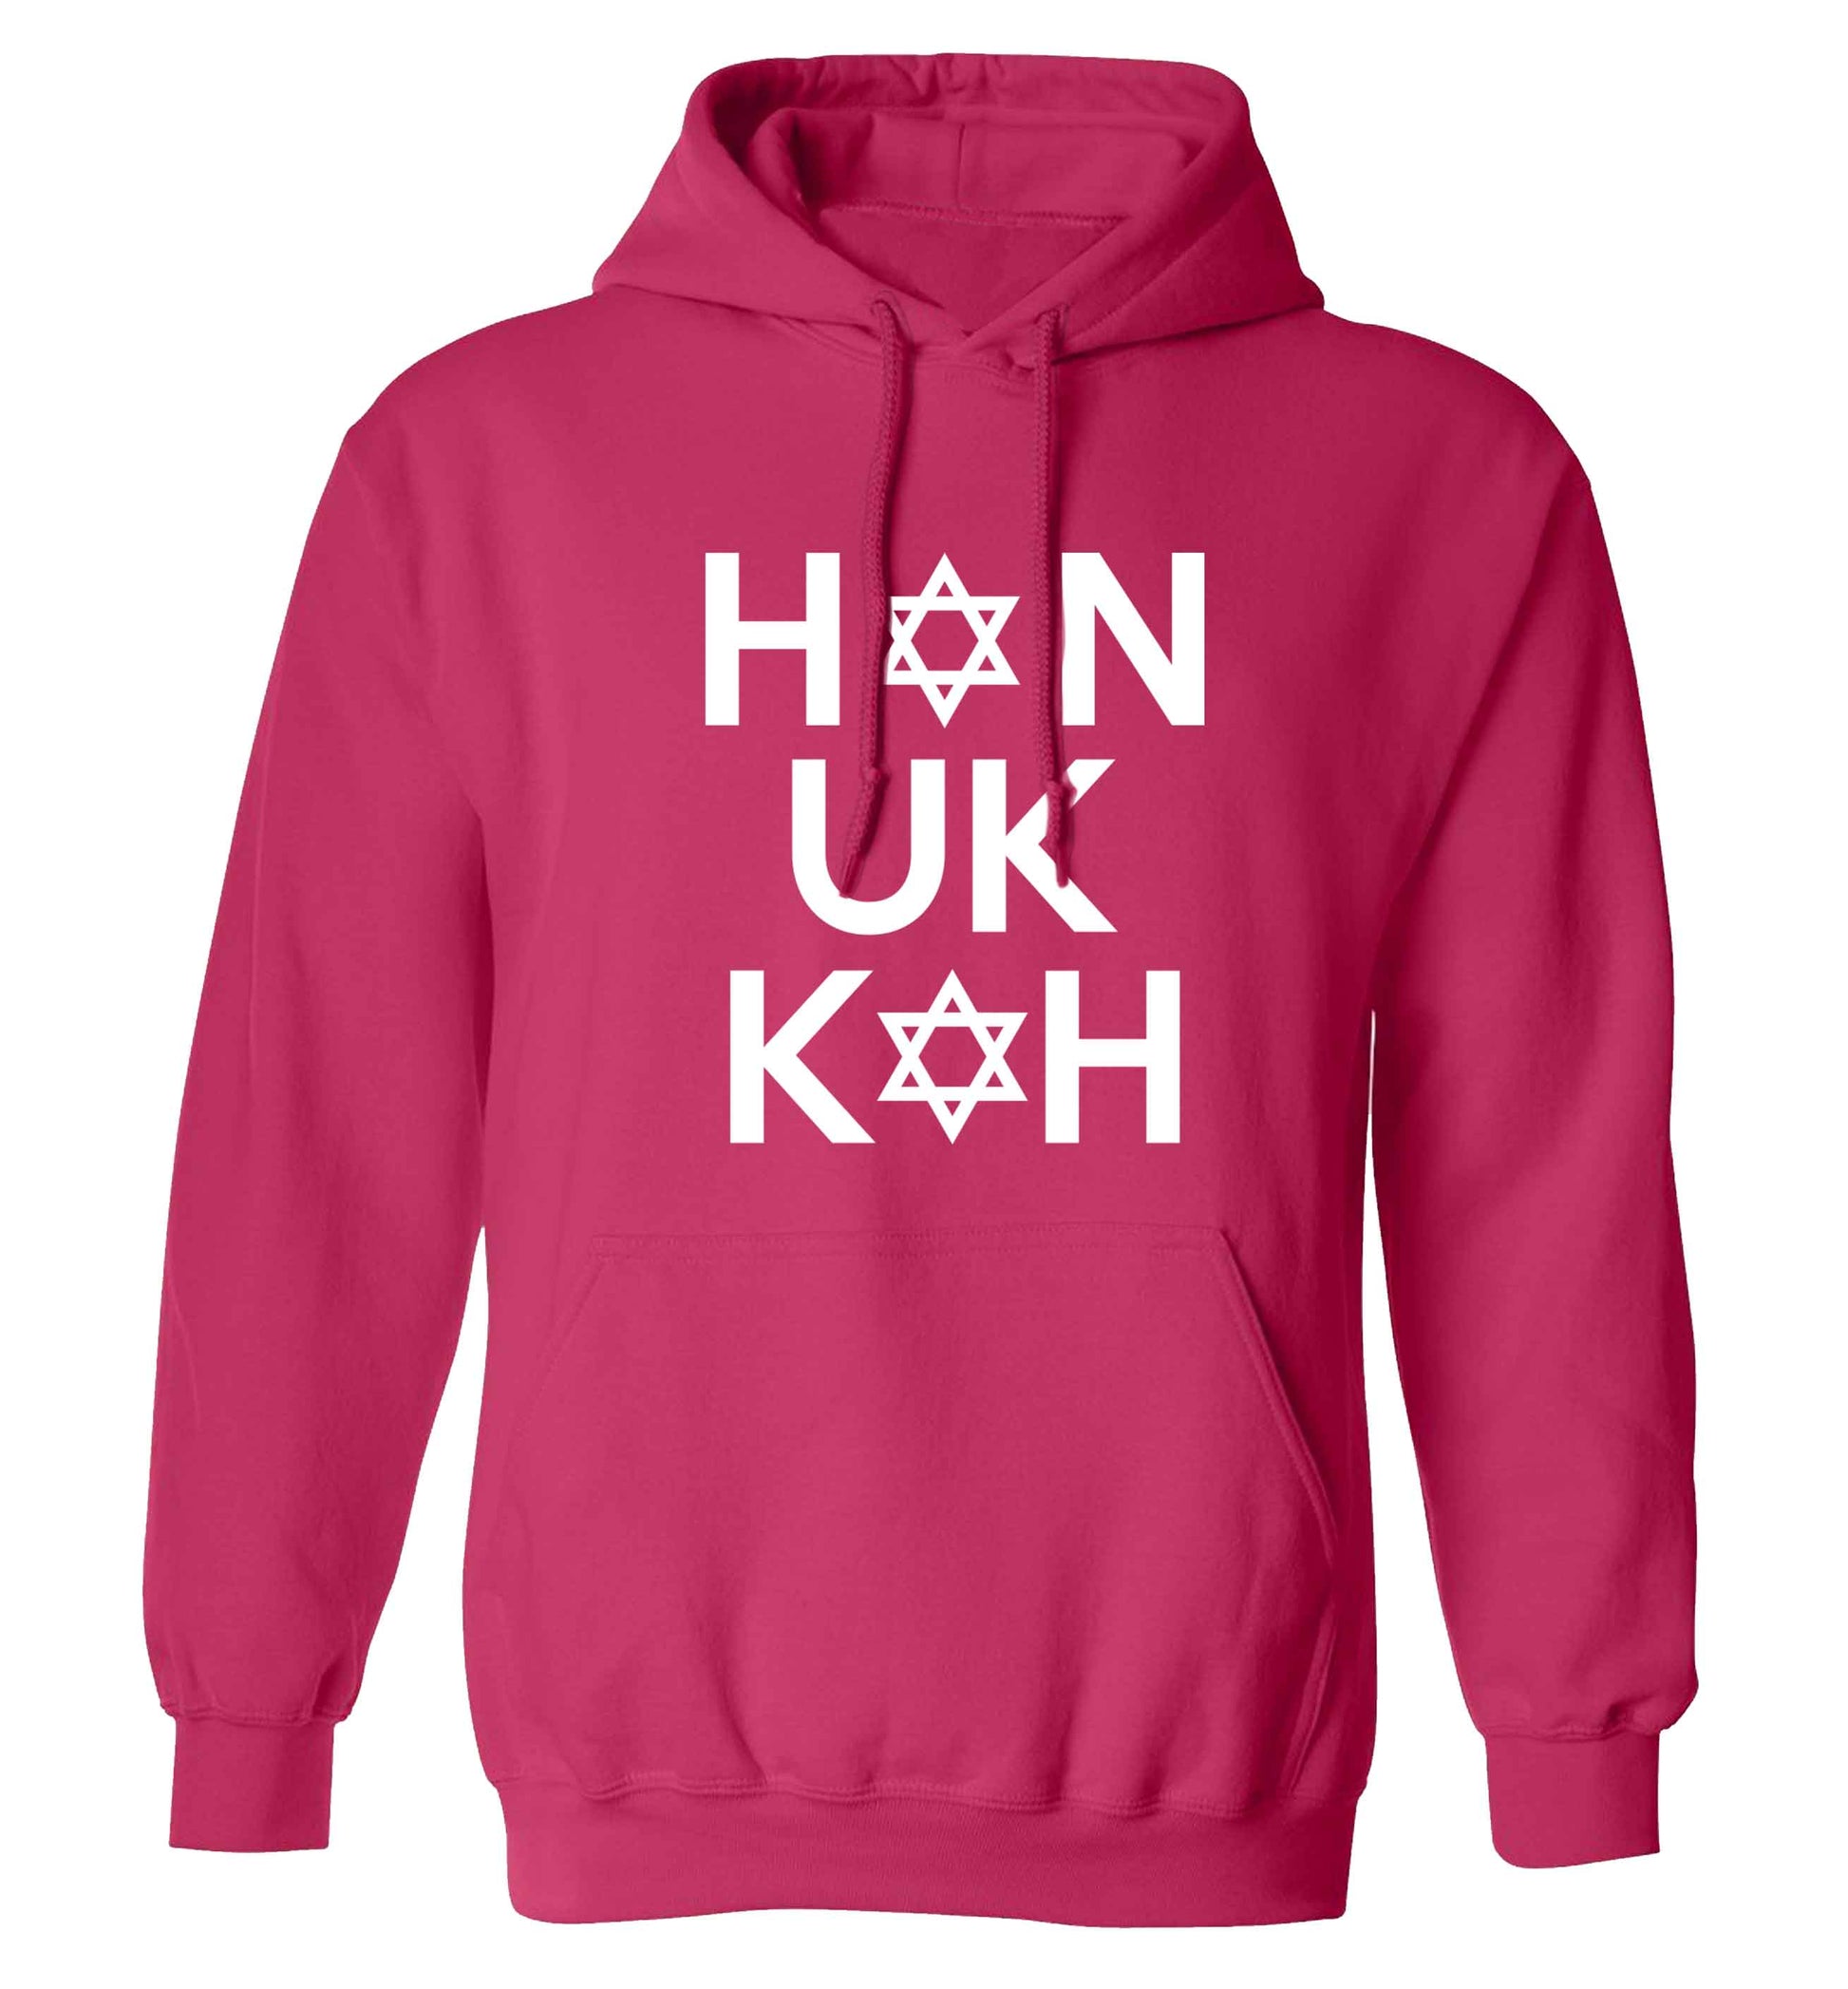 Han uk kah  Hanukkah star of david adults unisex pink hoodie 2XL